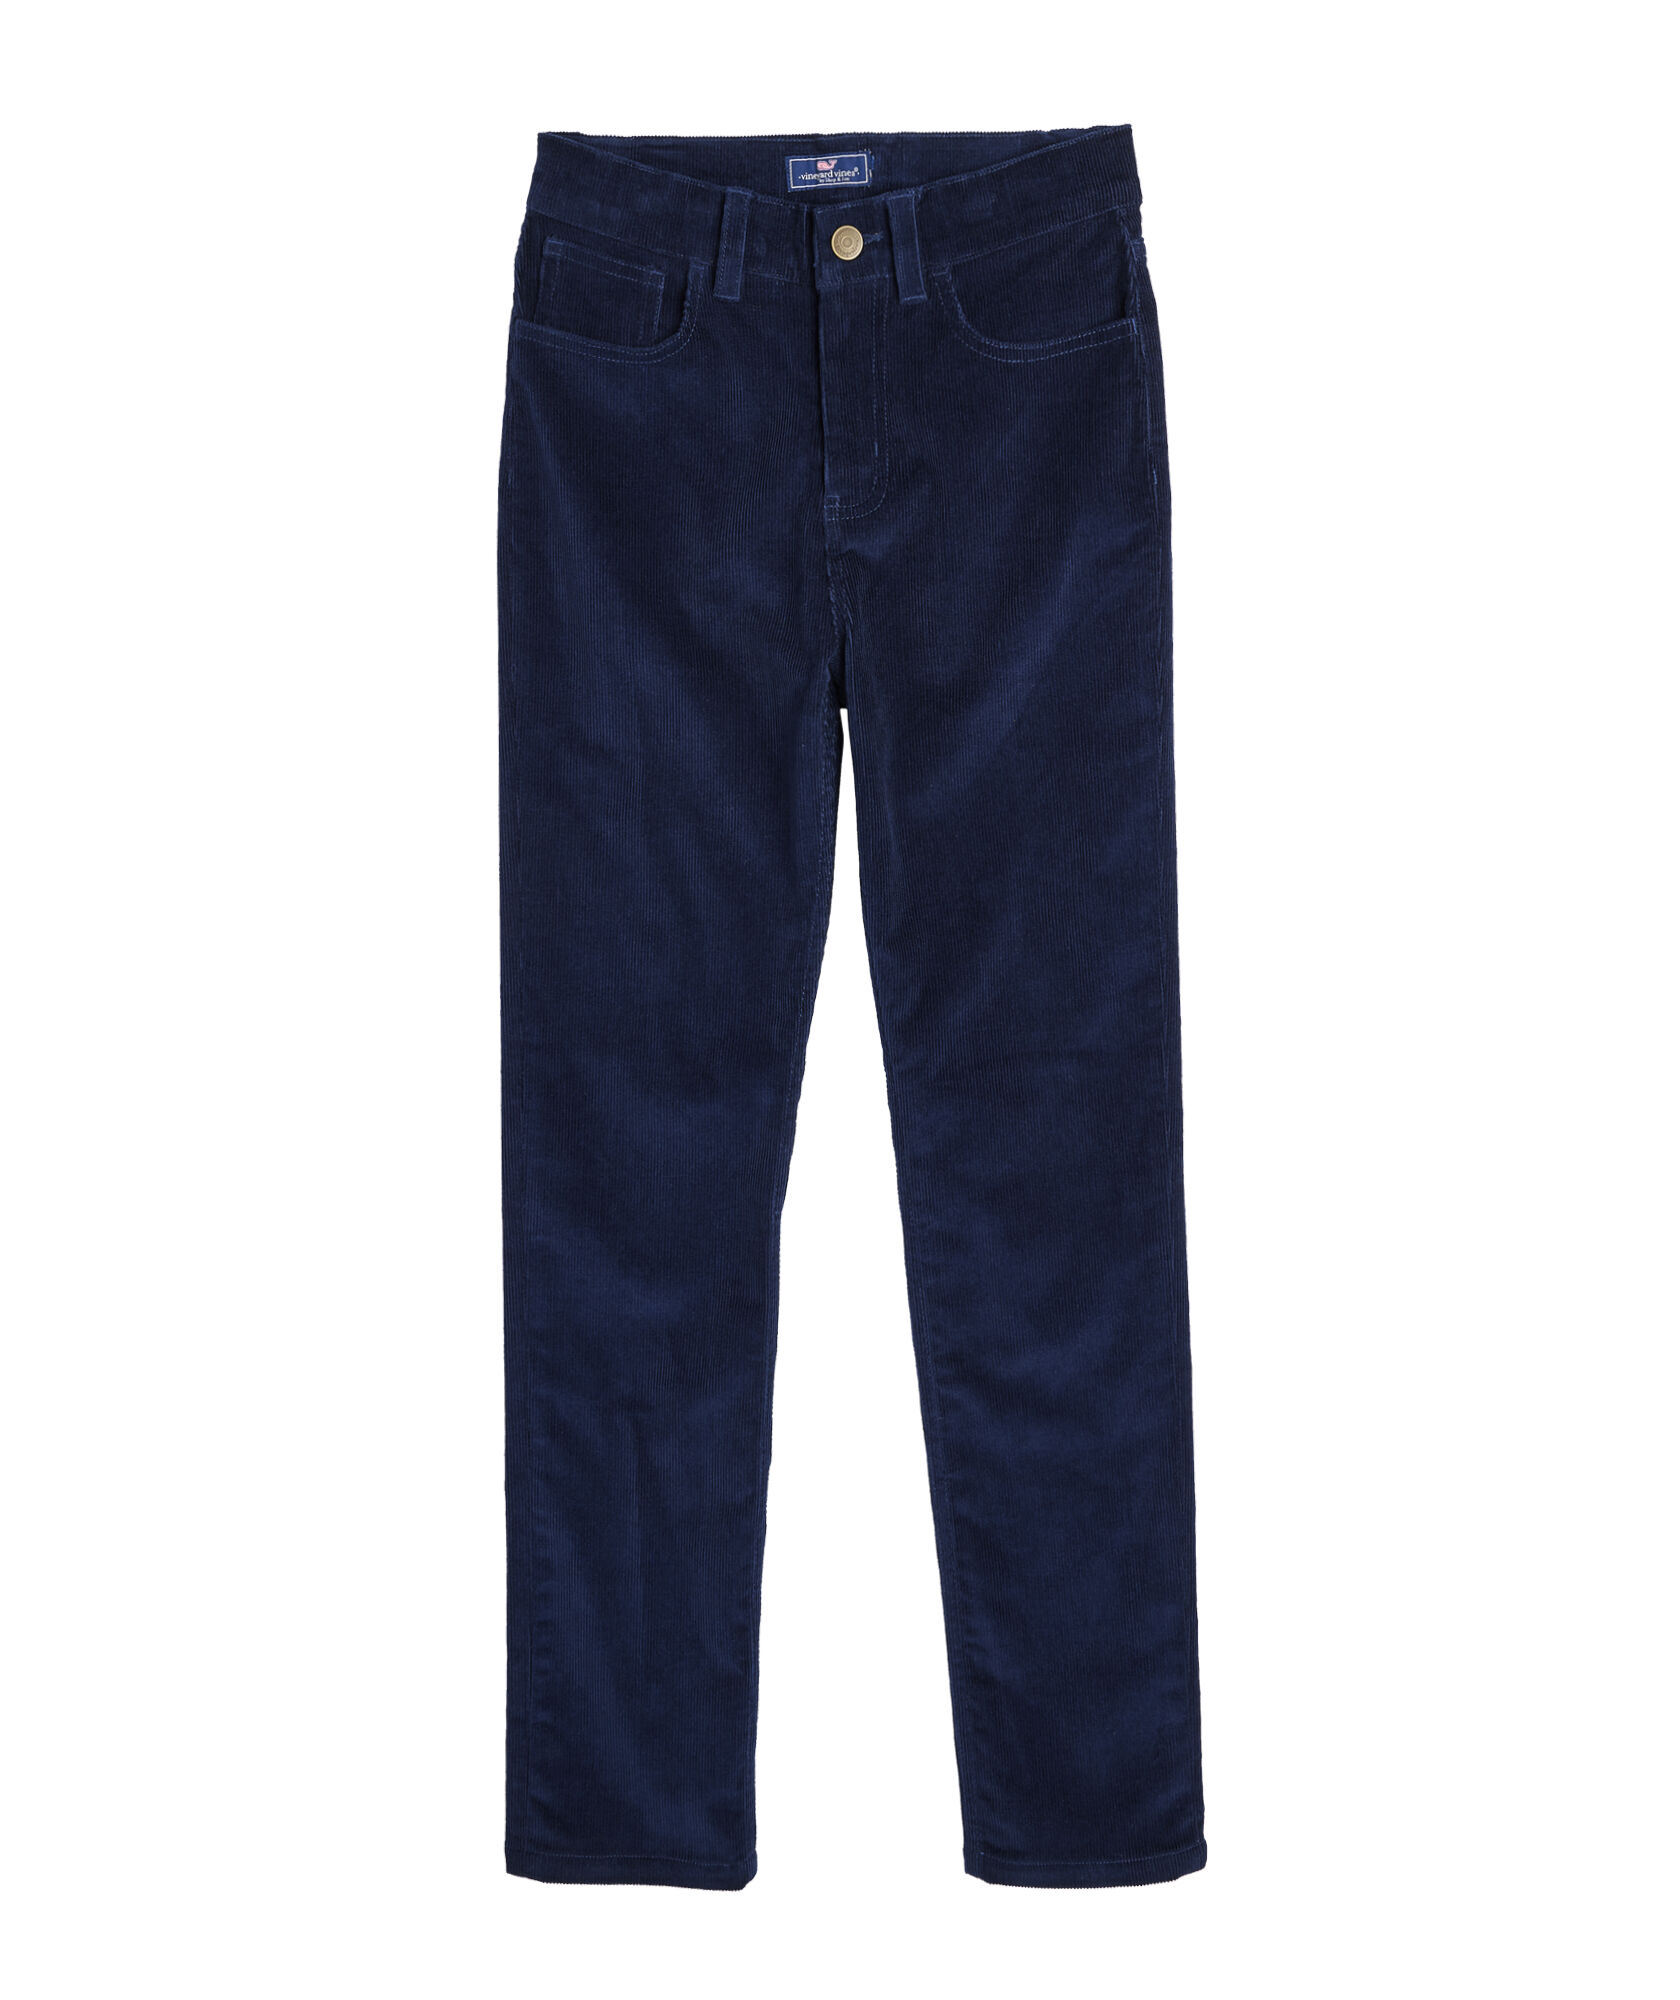 OUTLET Boys' Corduroy 5-Pocket Pants